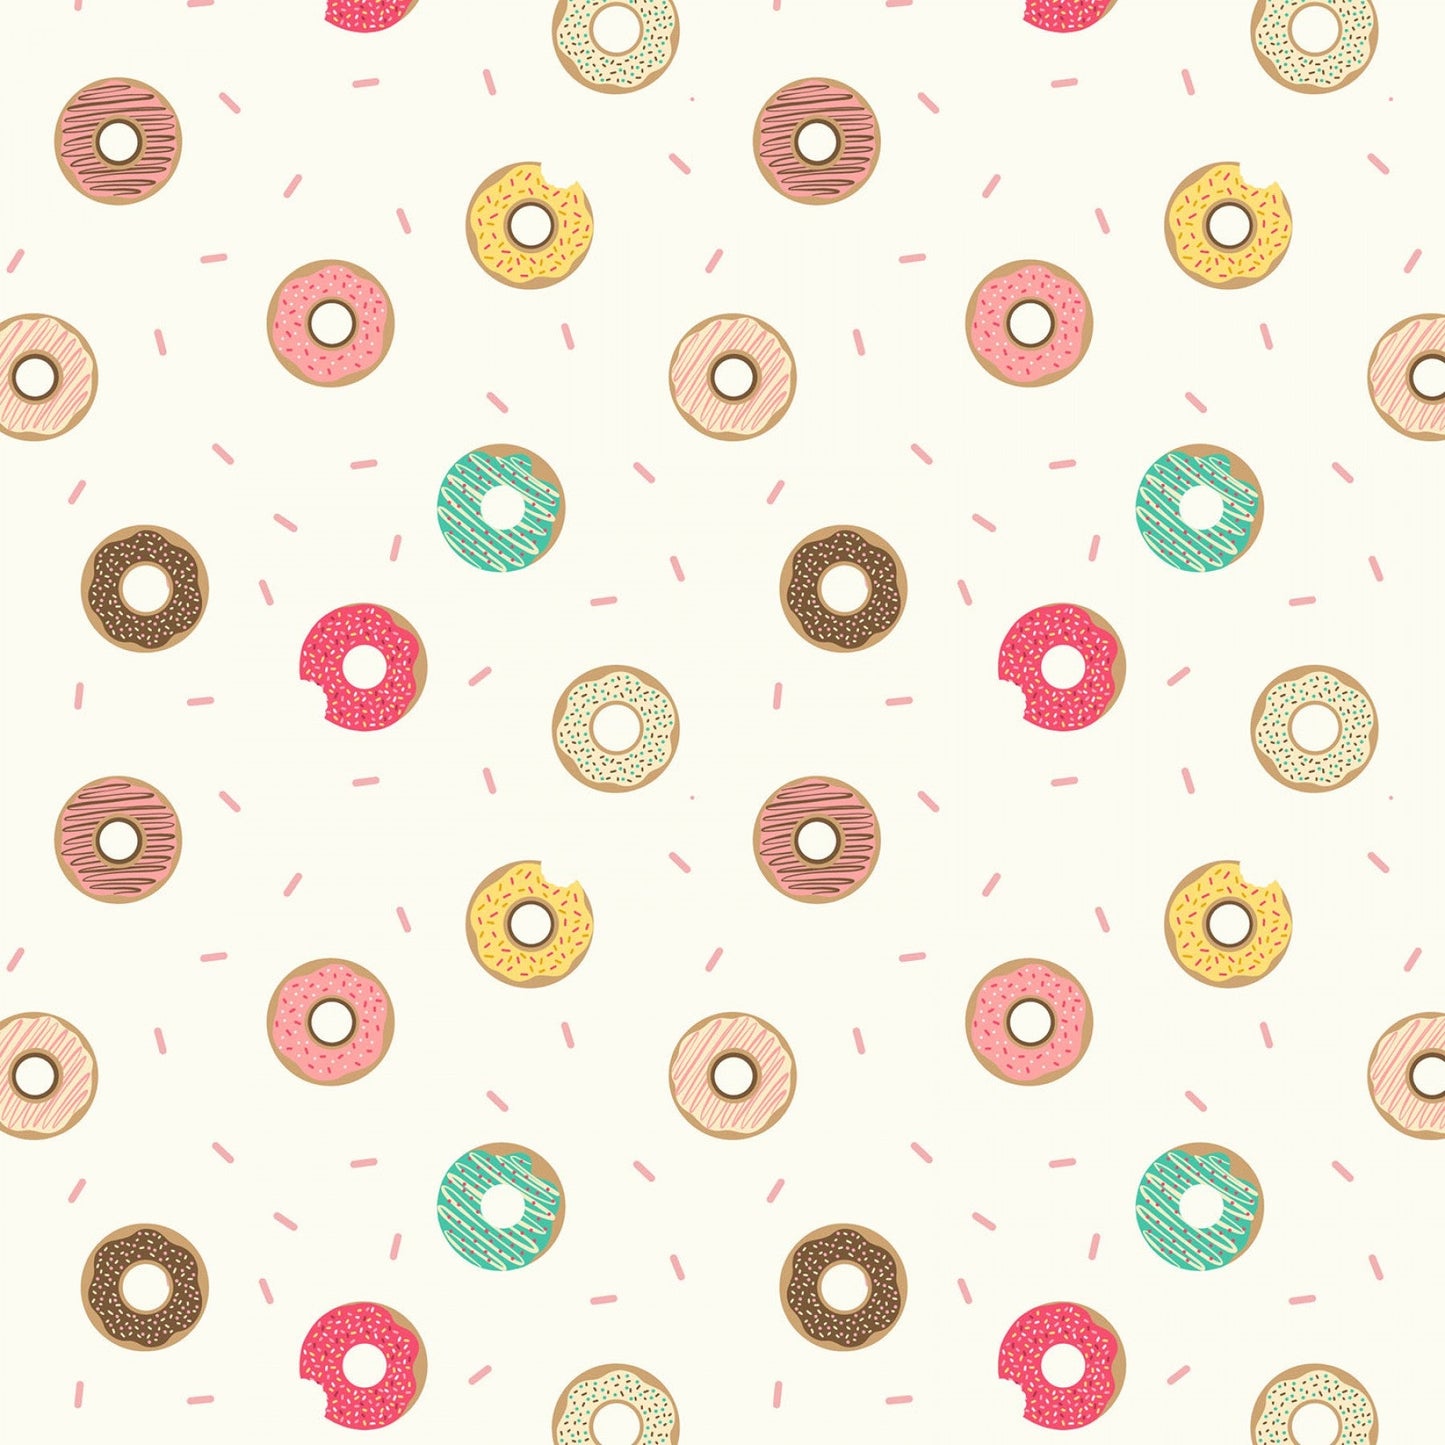 Small Things... Sweet - Doughnuts